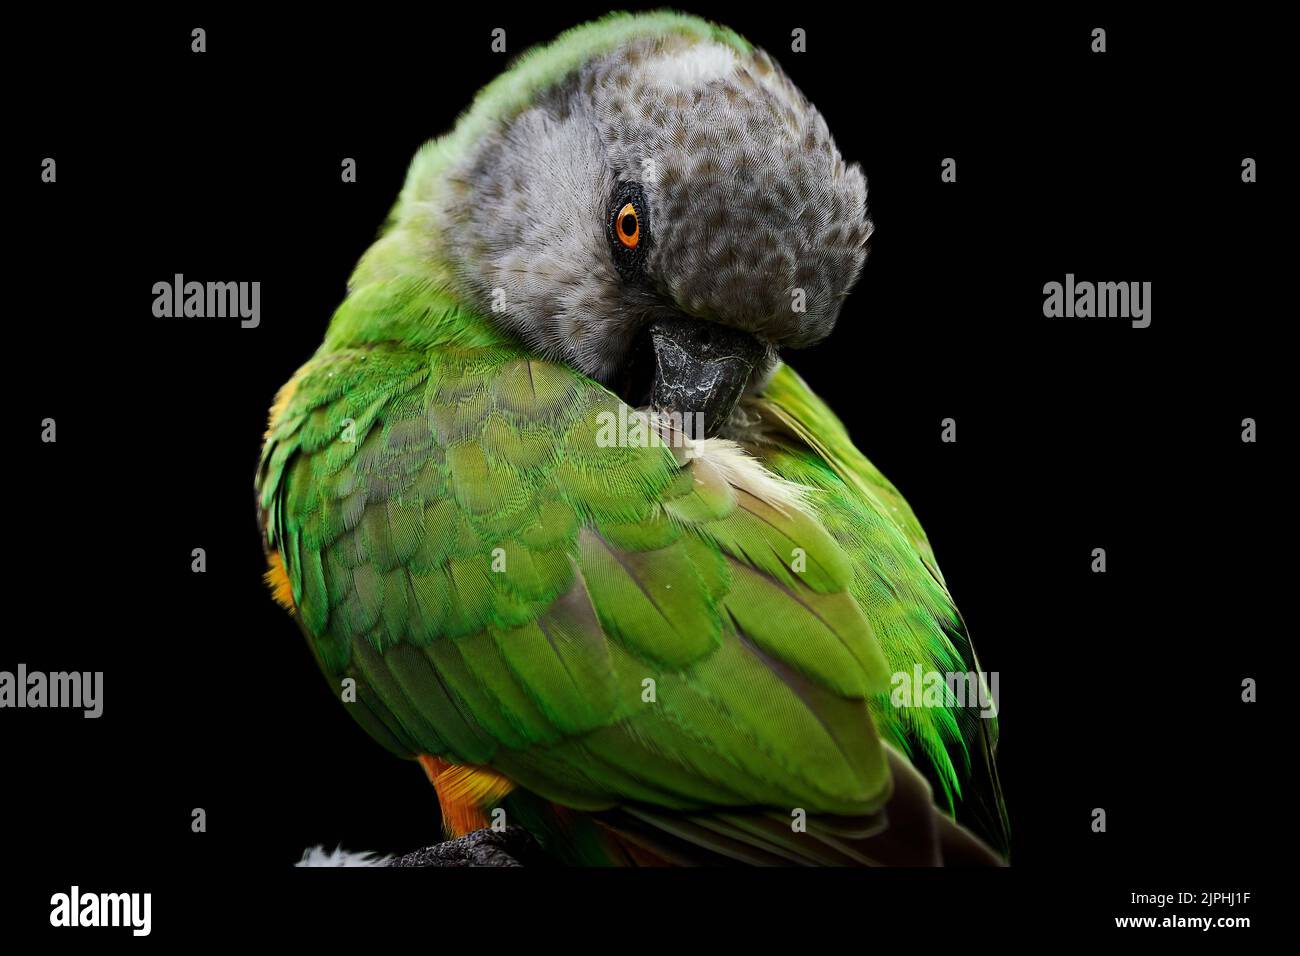 Close-up of a Senegal parrot (Poicephalus senegalus) preening its plumage Stock Photo